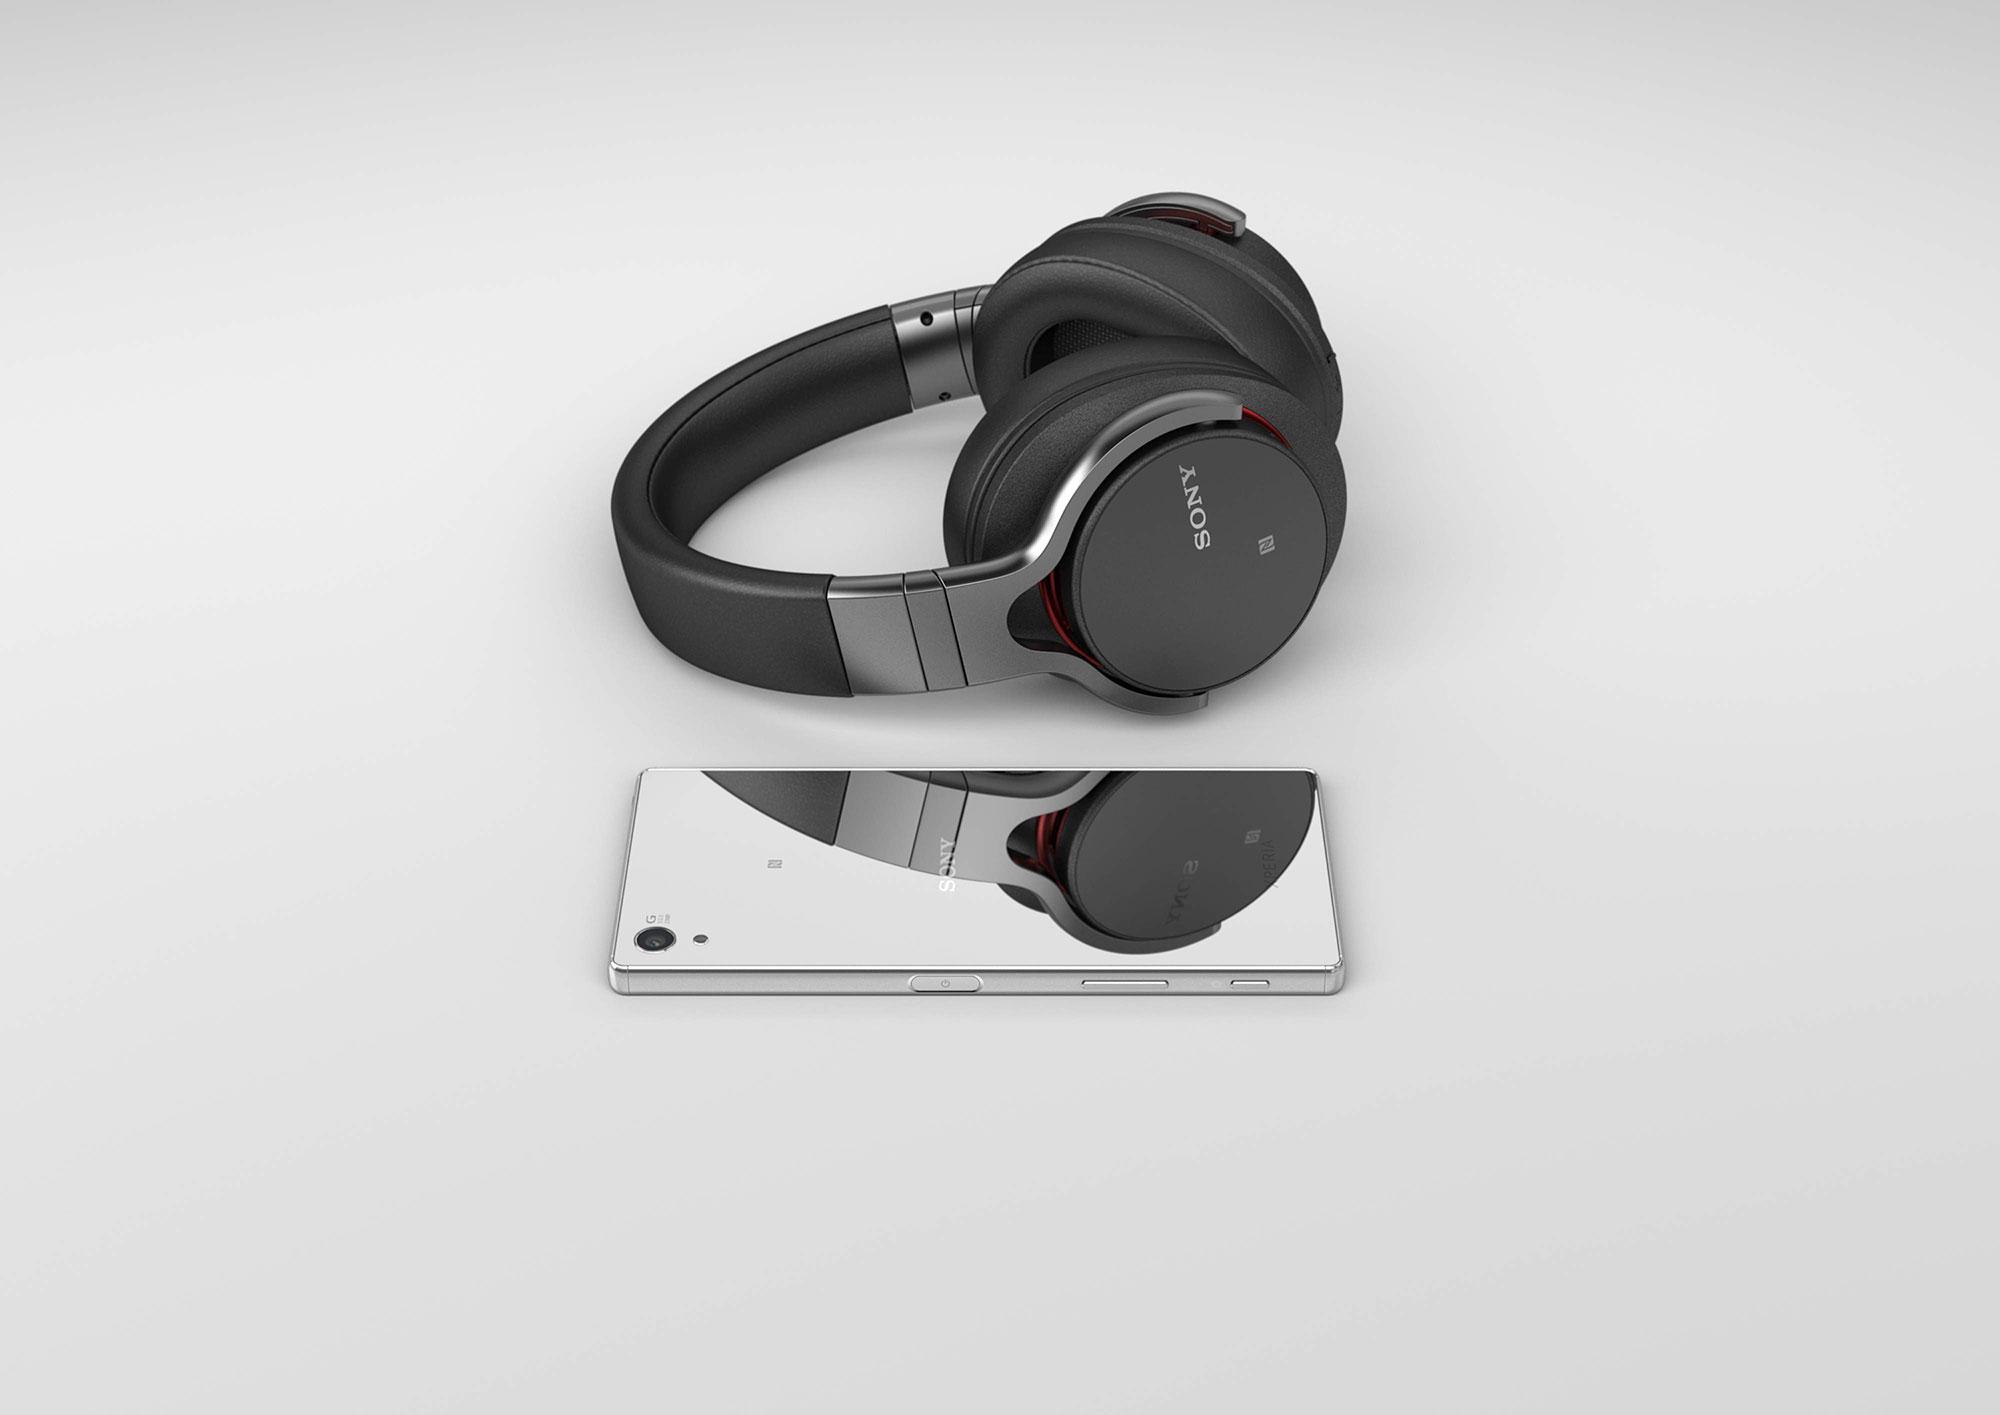 Sony Xperia Z5 Premium plateado con auriculares